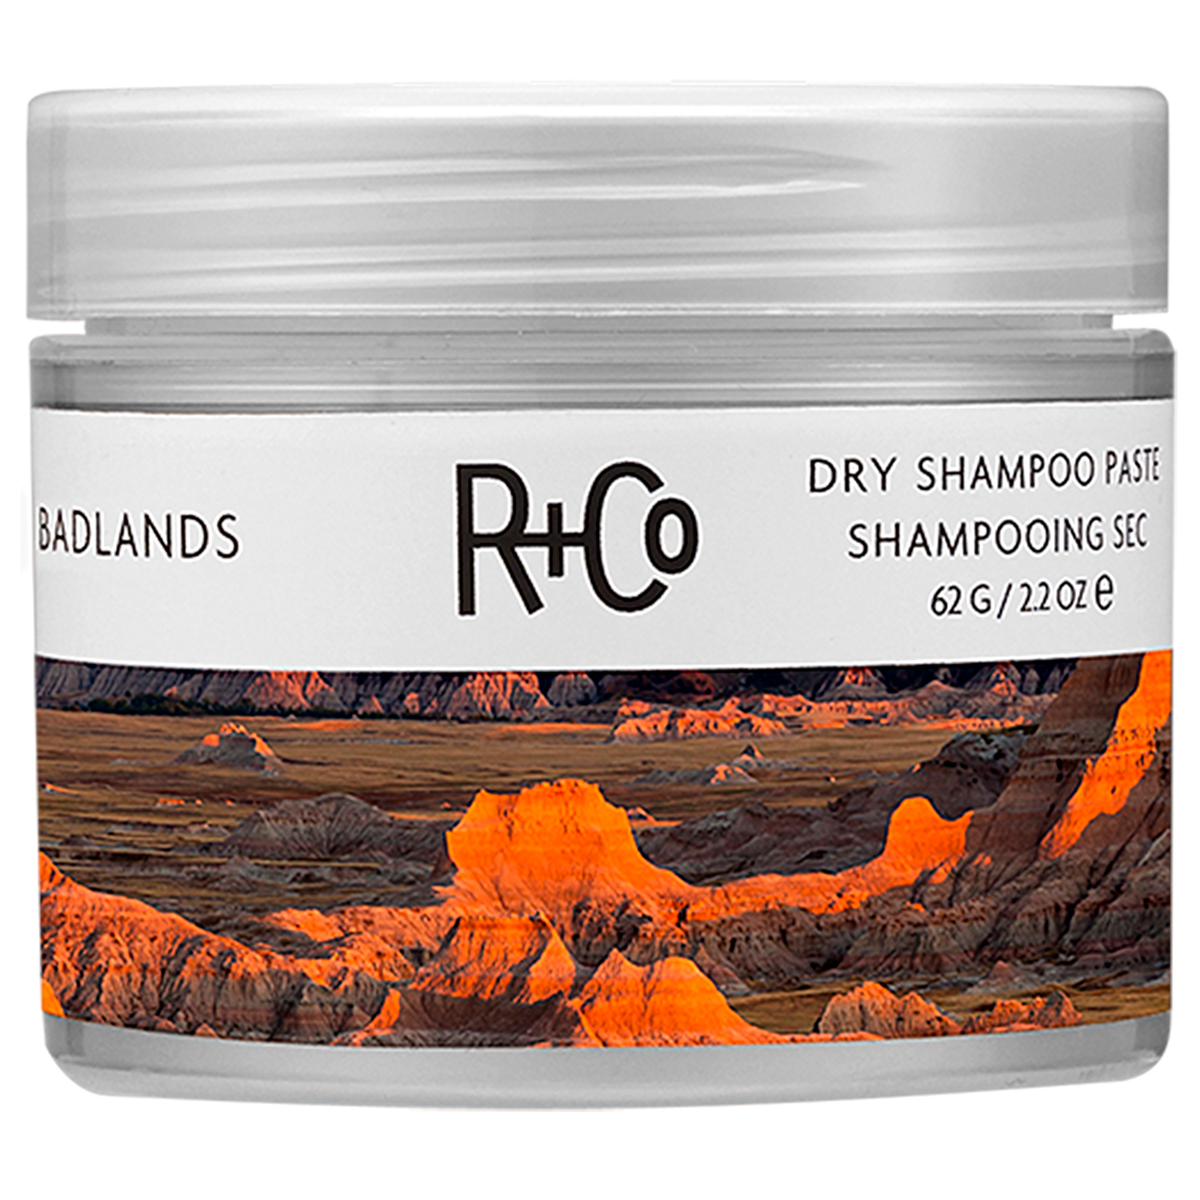 Badlands Dry Shampoo Paste, 62 g R+CO Hårstyling Hårpleie - Hårpleieprodukter - Hårstyling